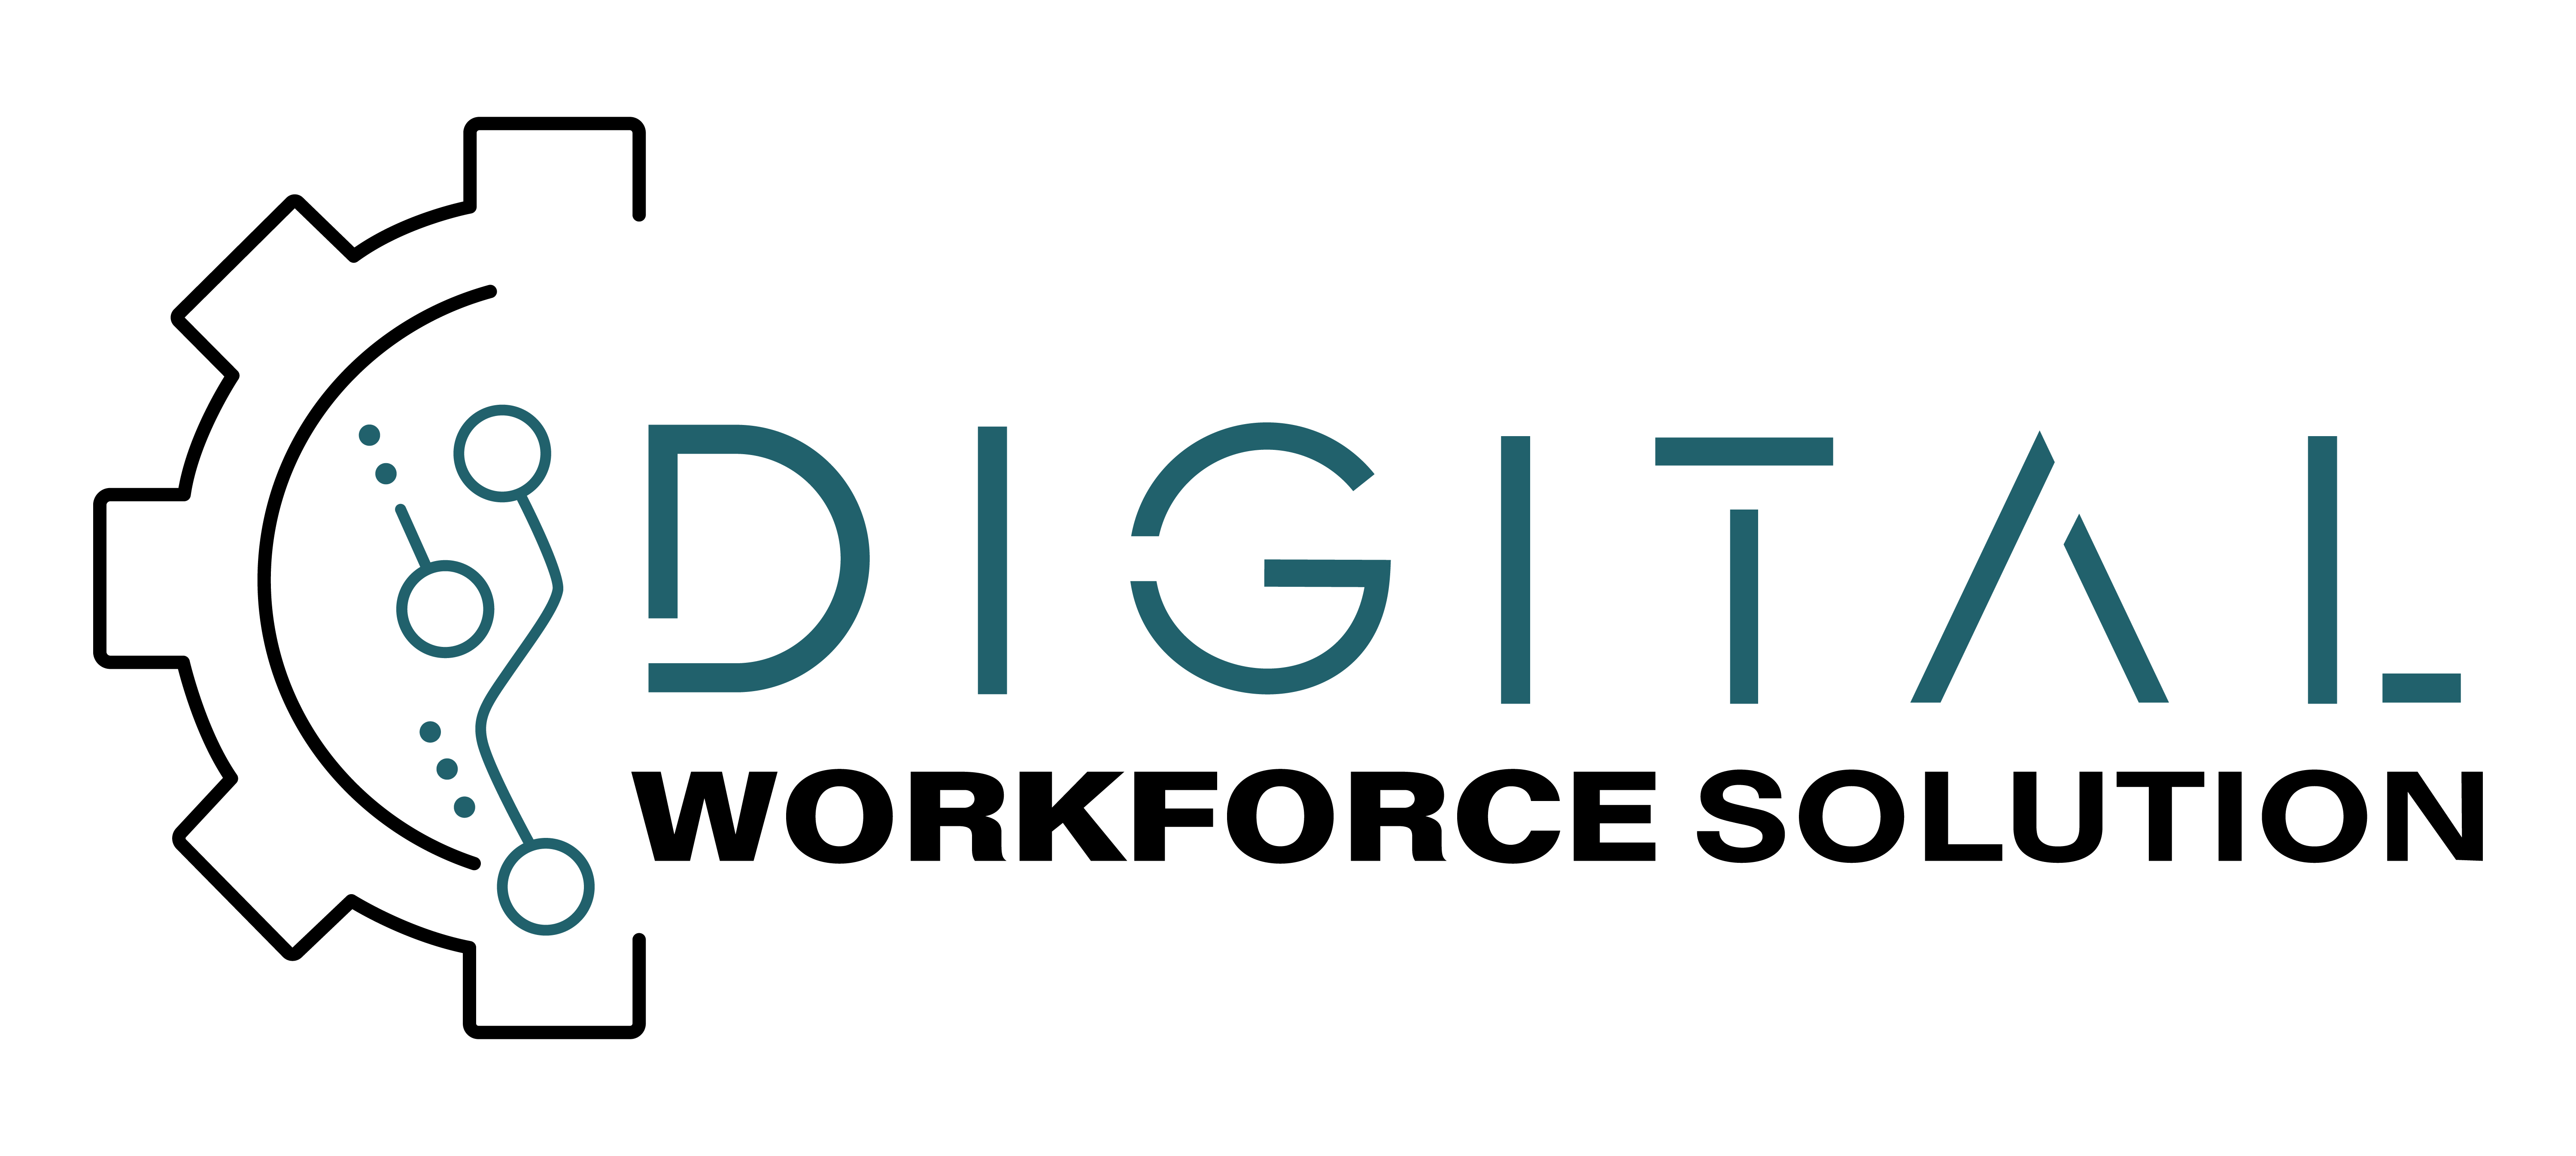 Digital Workforce Solution Logo